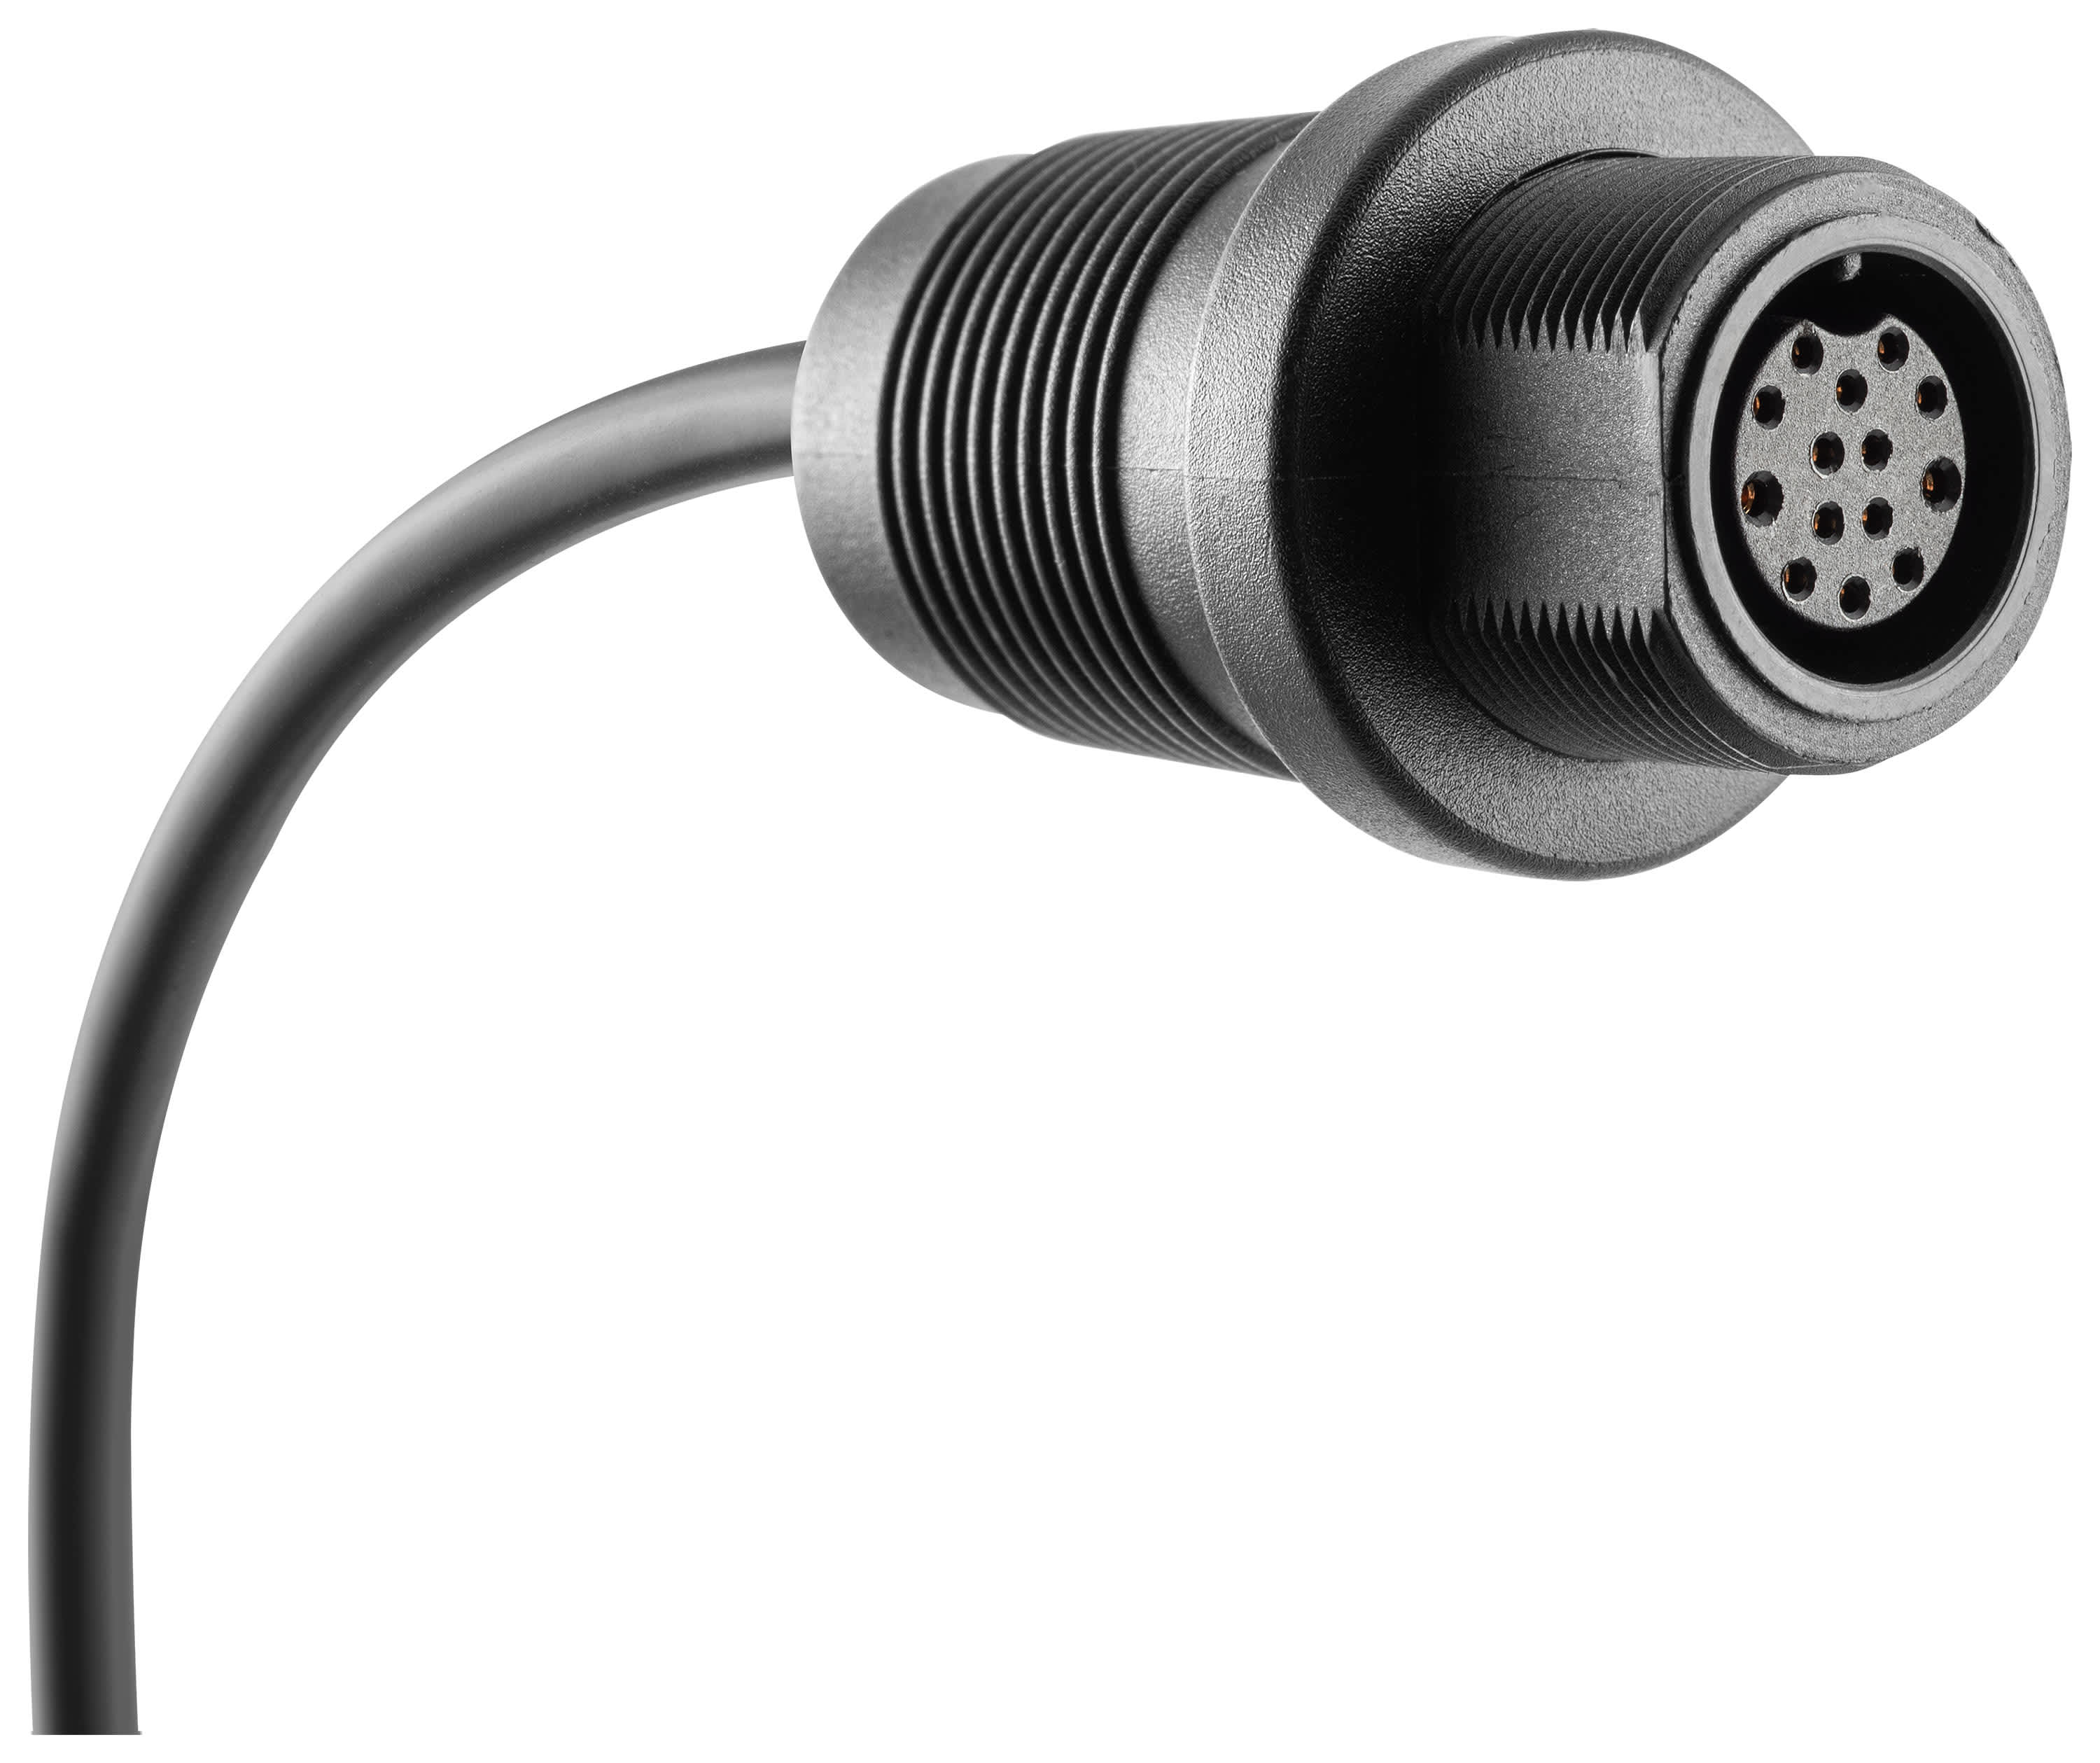 Minn Kota® DSC Adapter Cable/MKR-DSC-12 Garmin 4-Pin